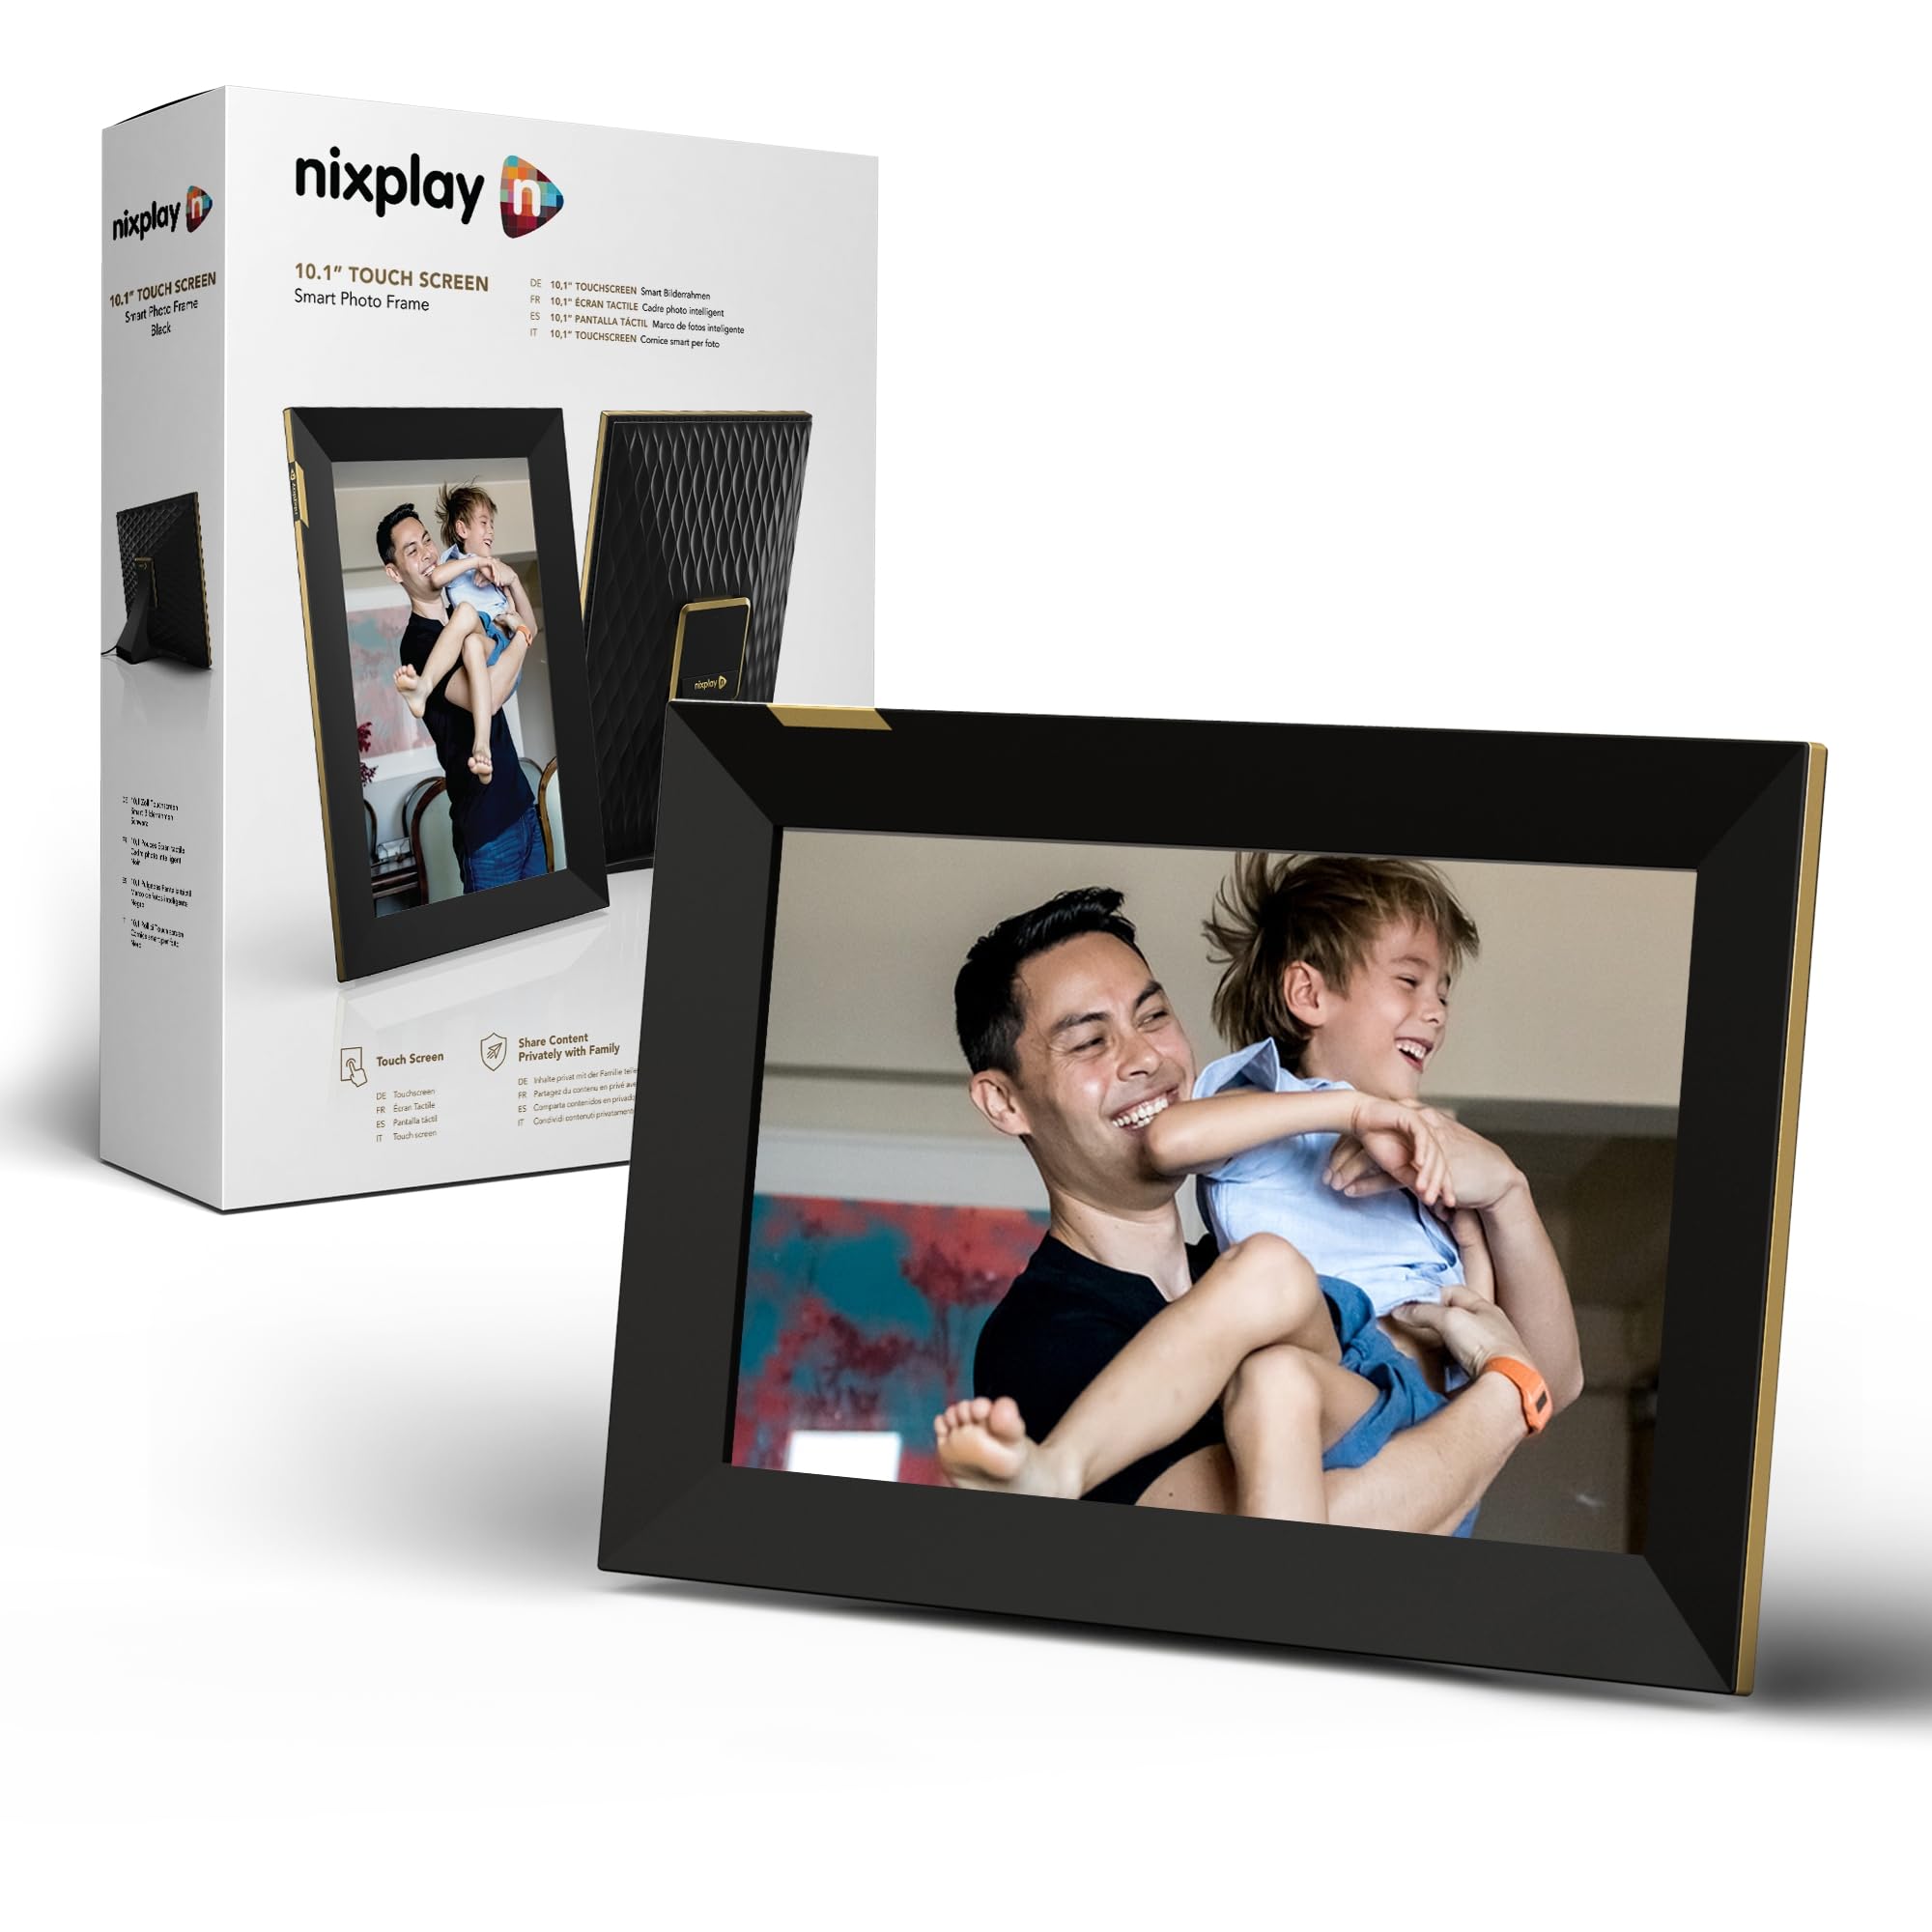 Nixplay 10,1 Zoll Touchscreen Digitaler Bilderrahmen mit WiFi (W10K), Schwarz-Gold, Videoclips und Fotos sofort per E-Mail oder App teilen…